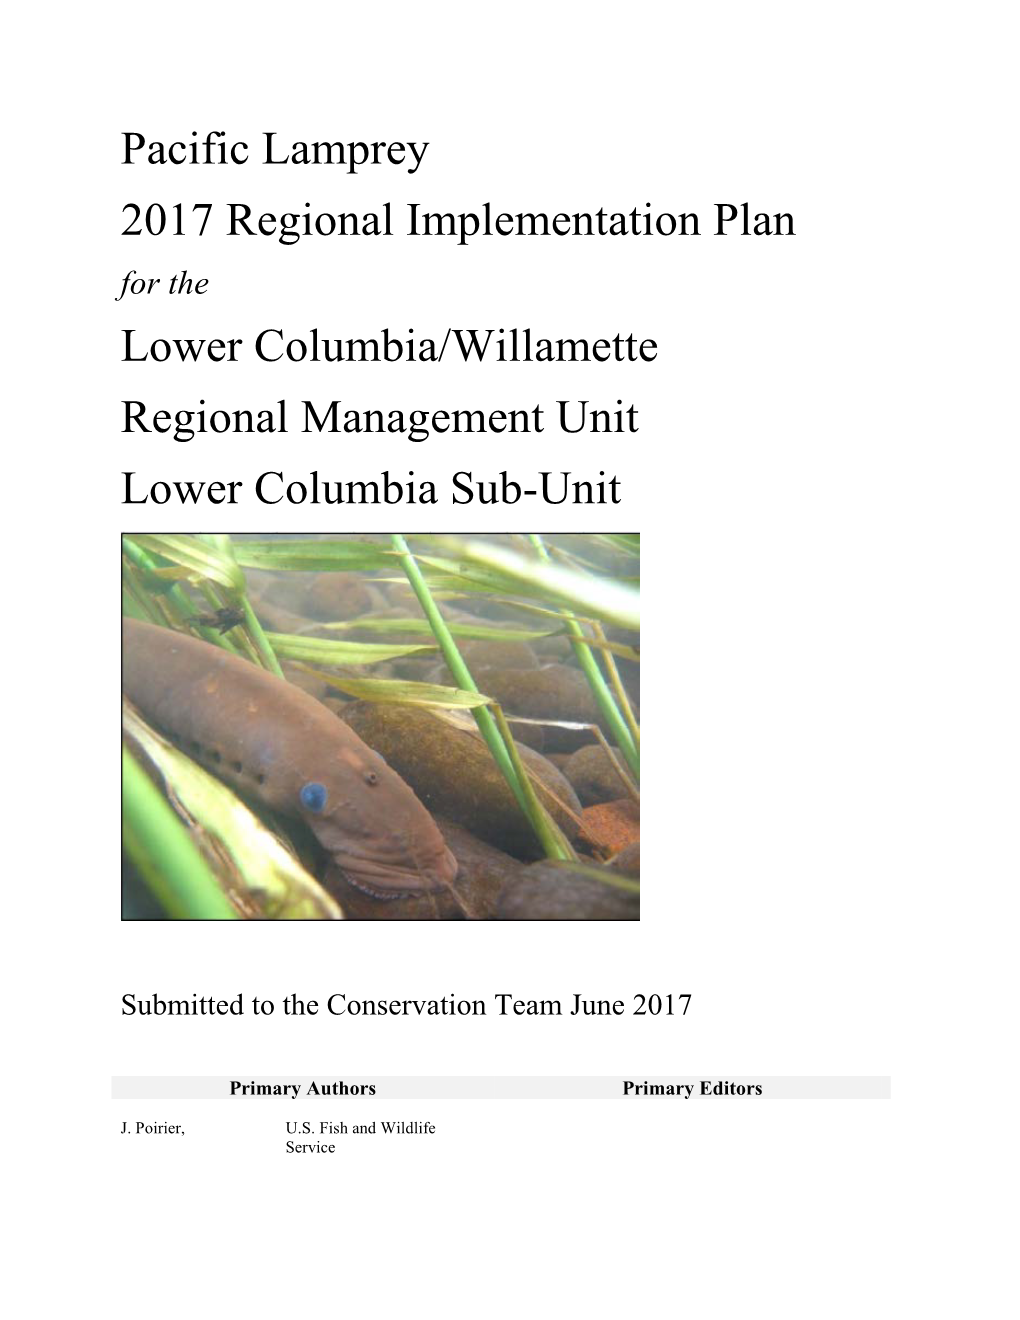 Pacific Lamprey 2017 Regional Implementation Plan Lower